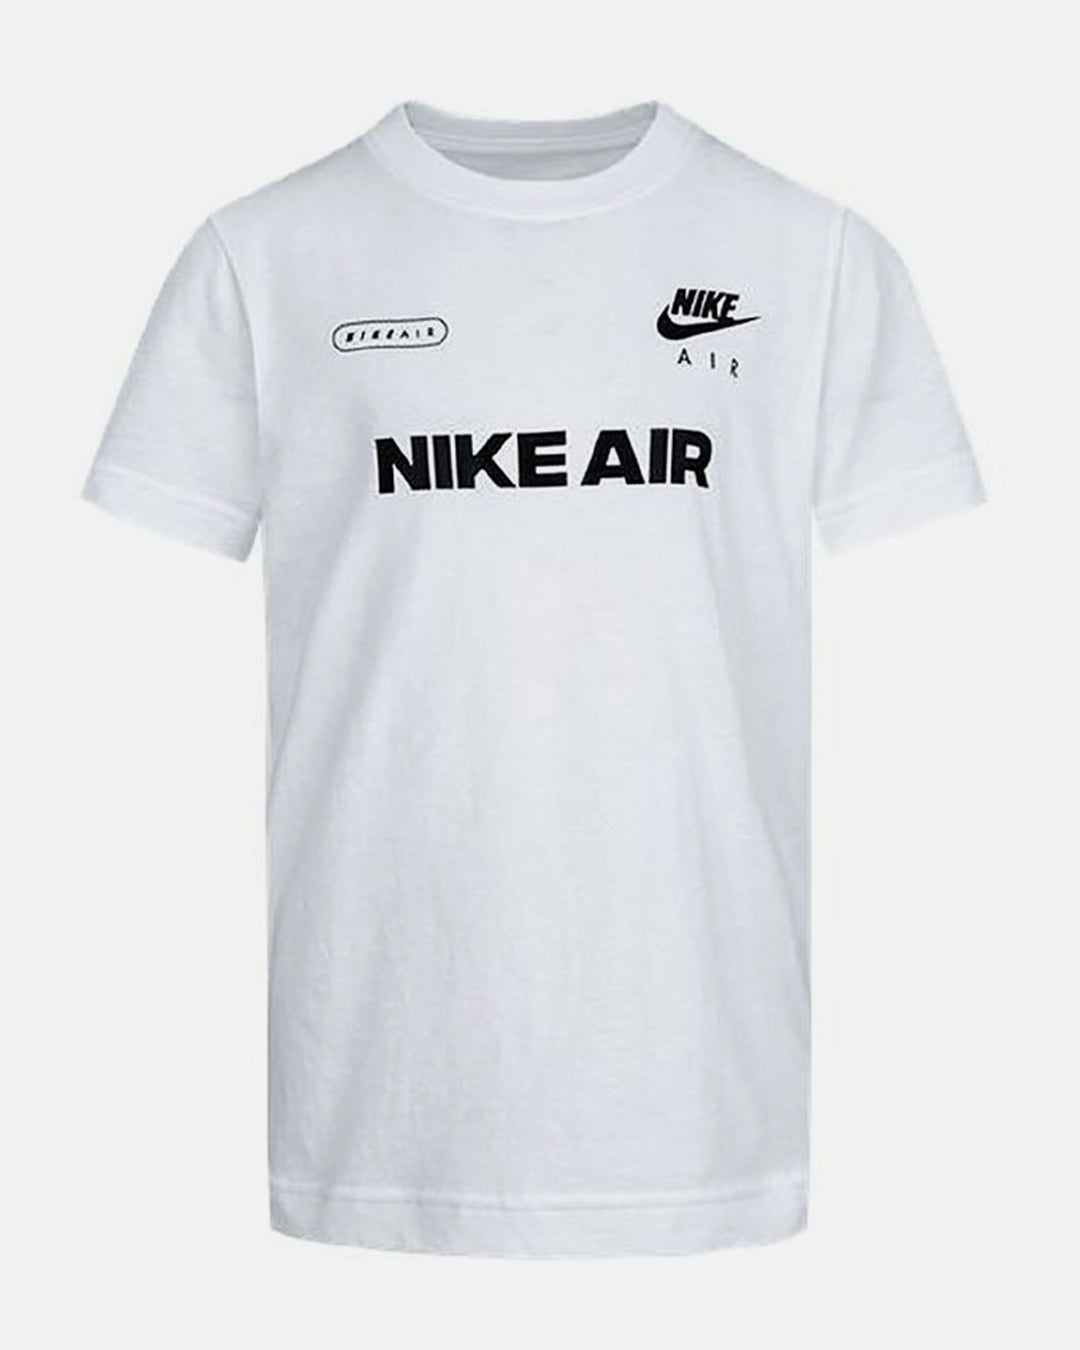 Maglietta Nike Air per bambini - bianca